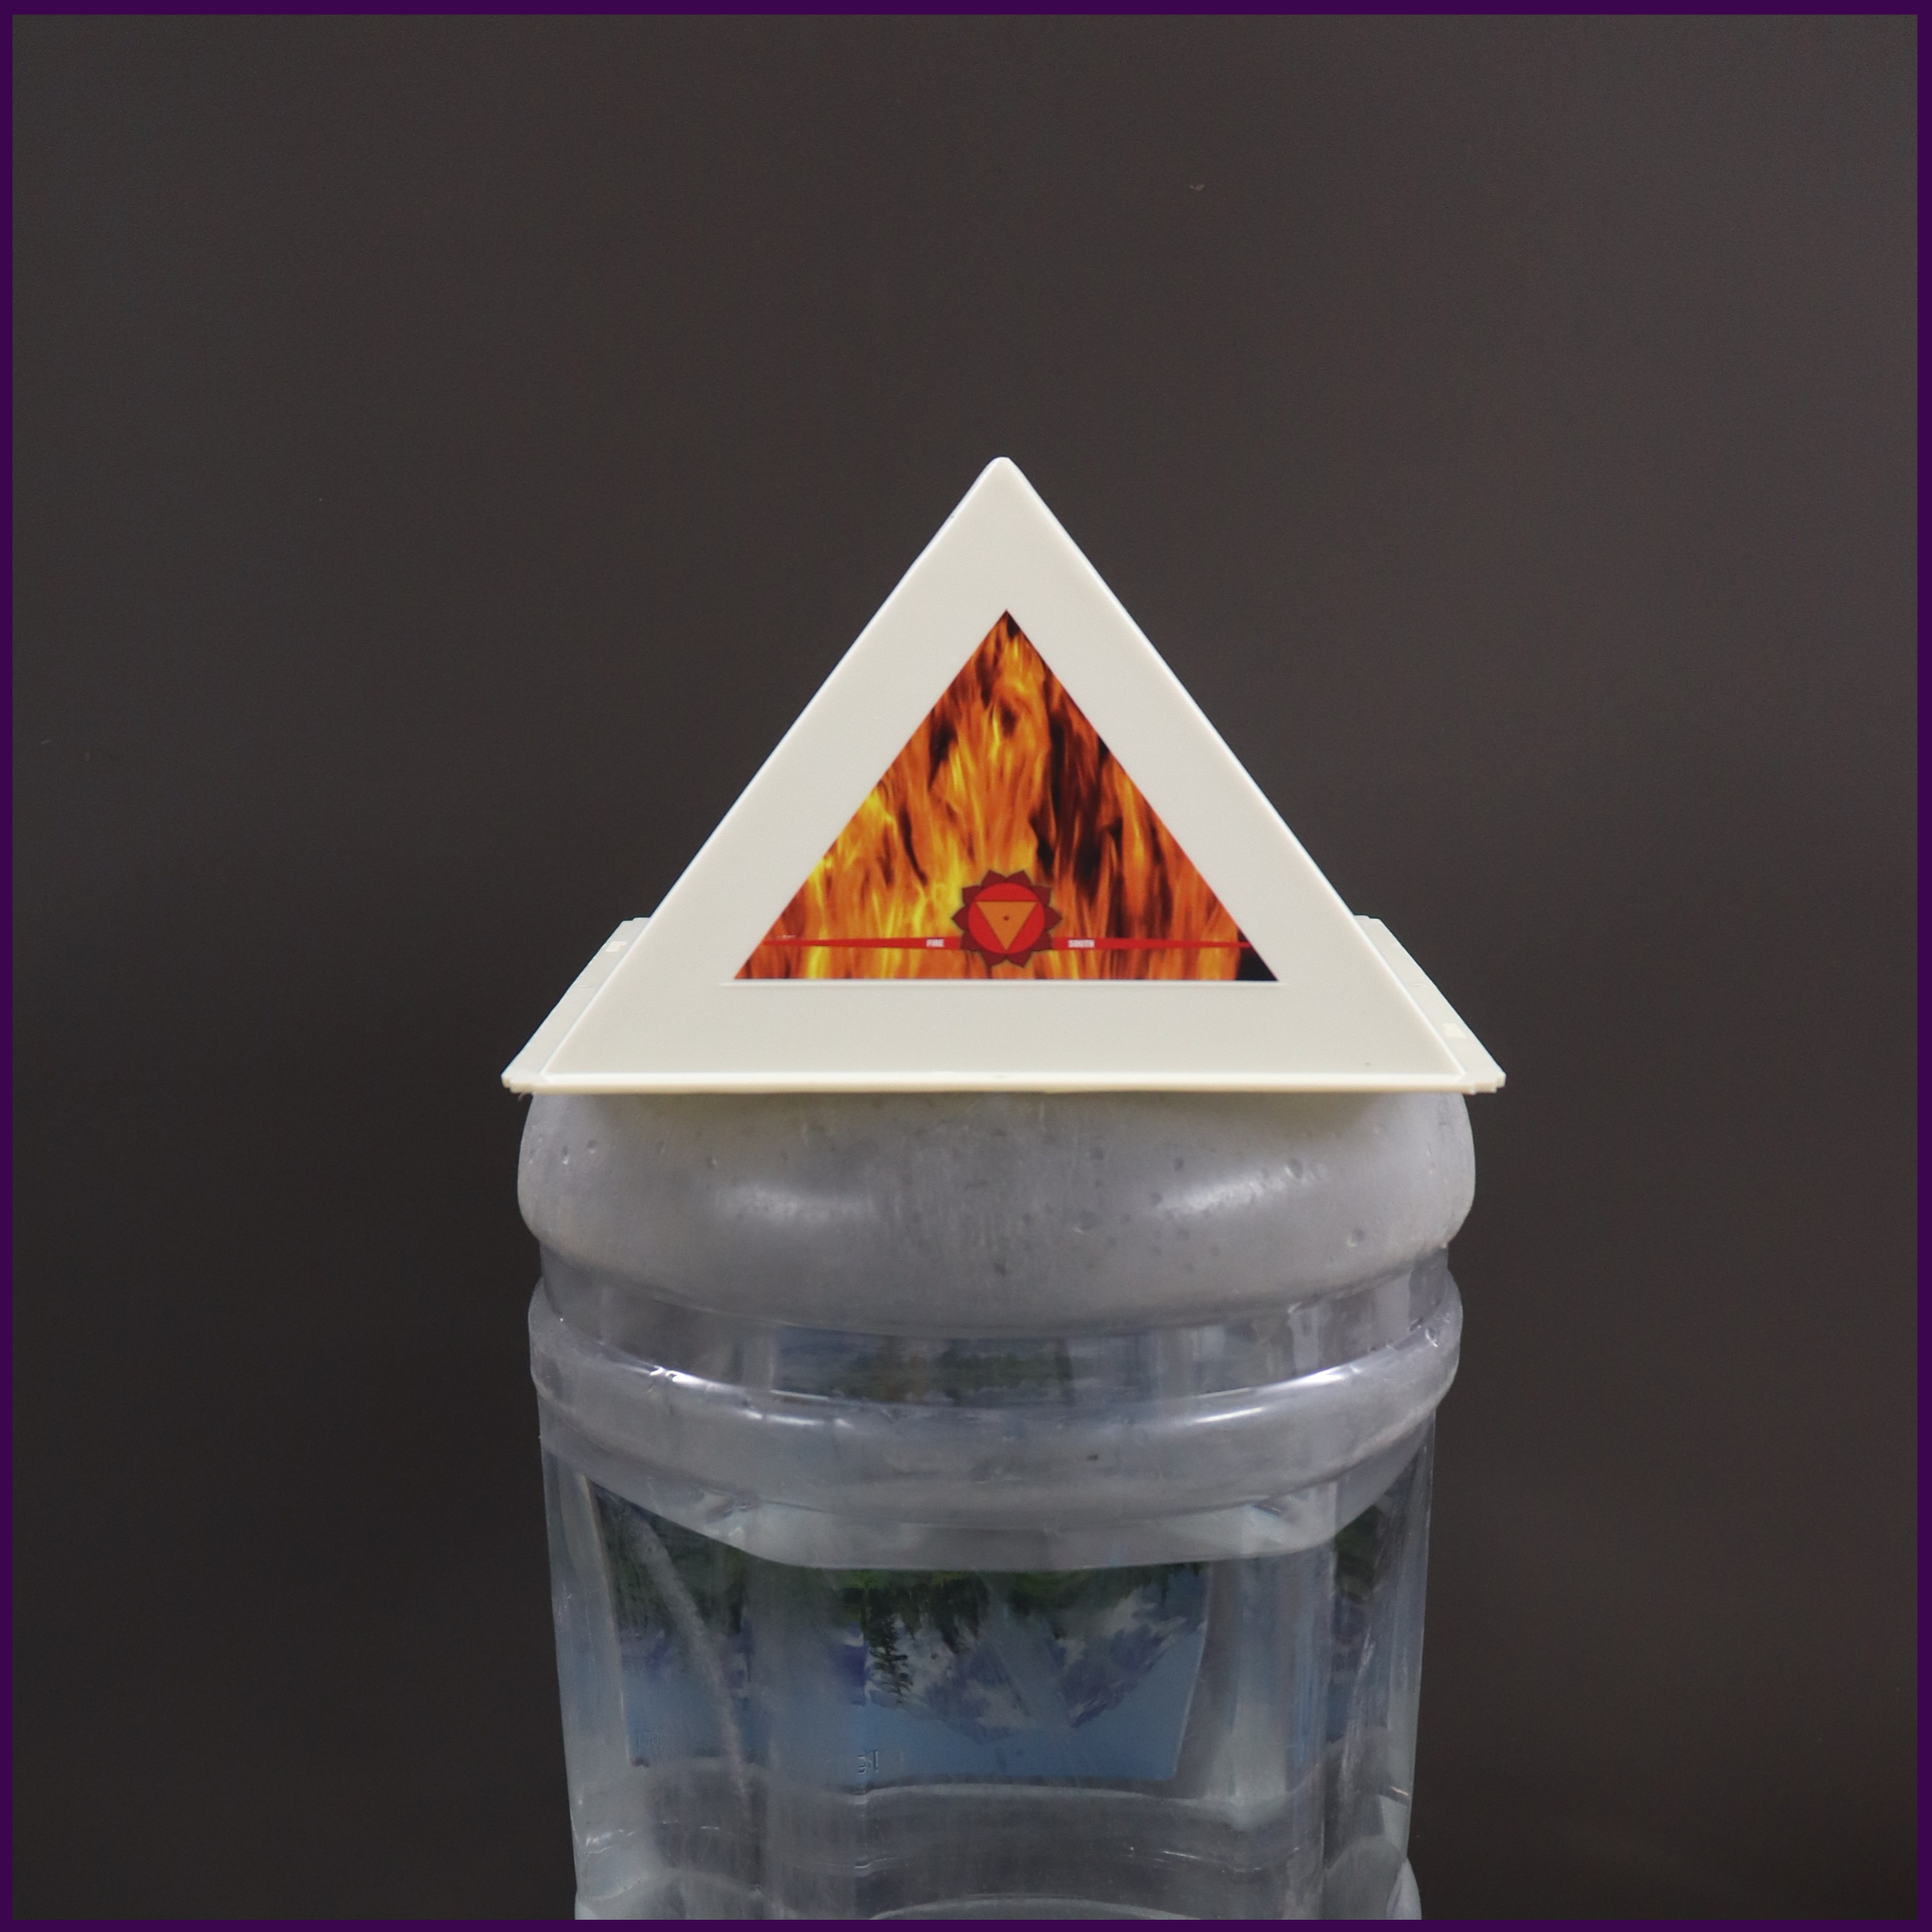 Pyramid Meditation Cap for Daily Meditation - Set of 5 - 51pyramids